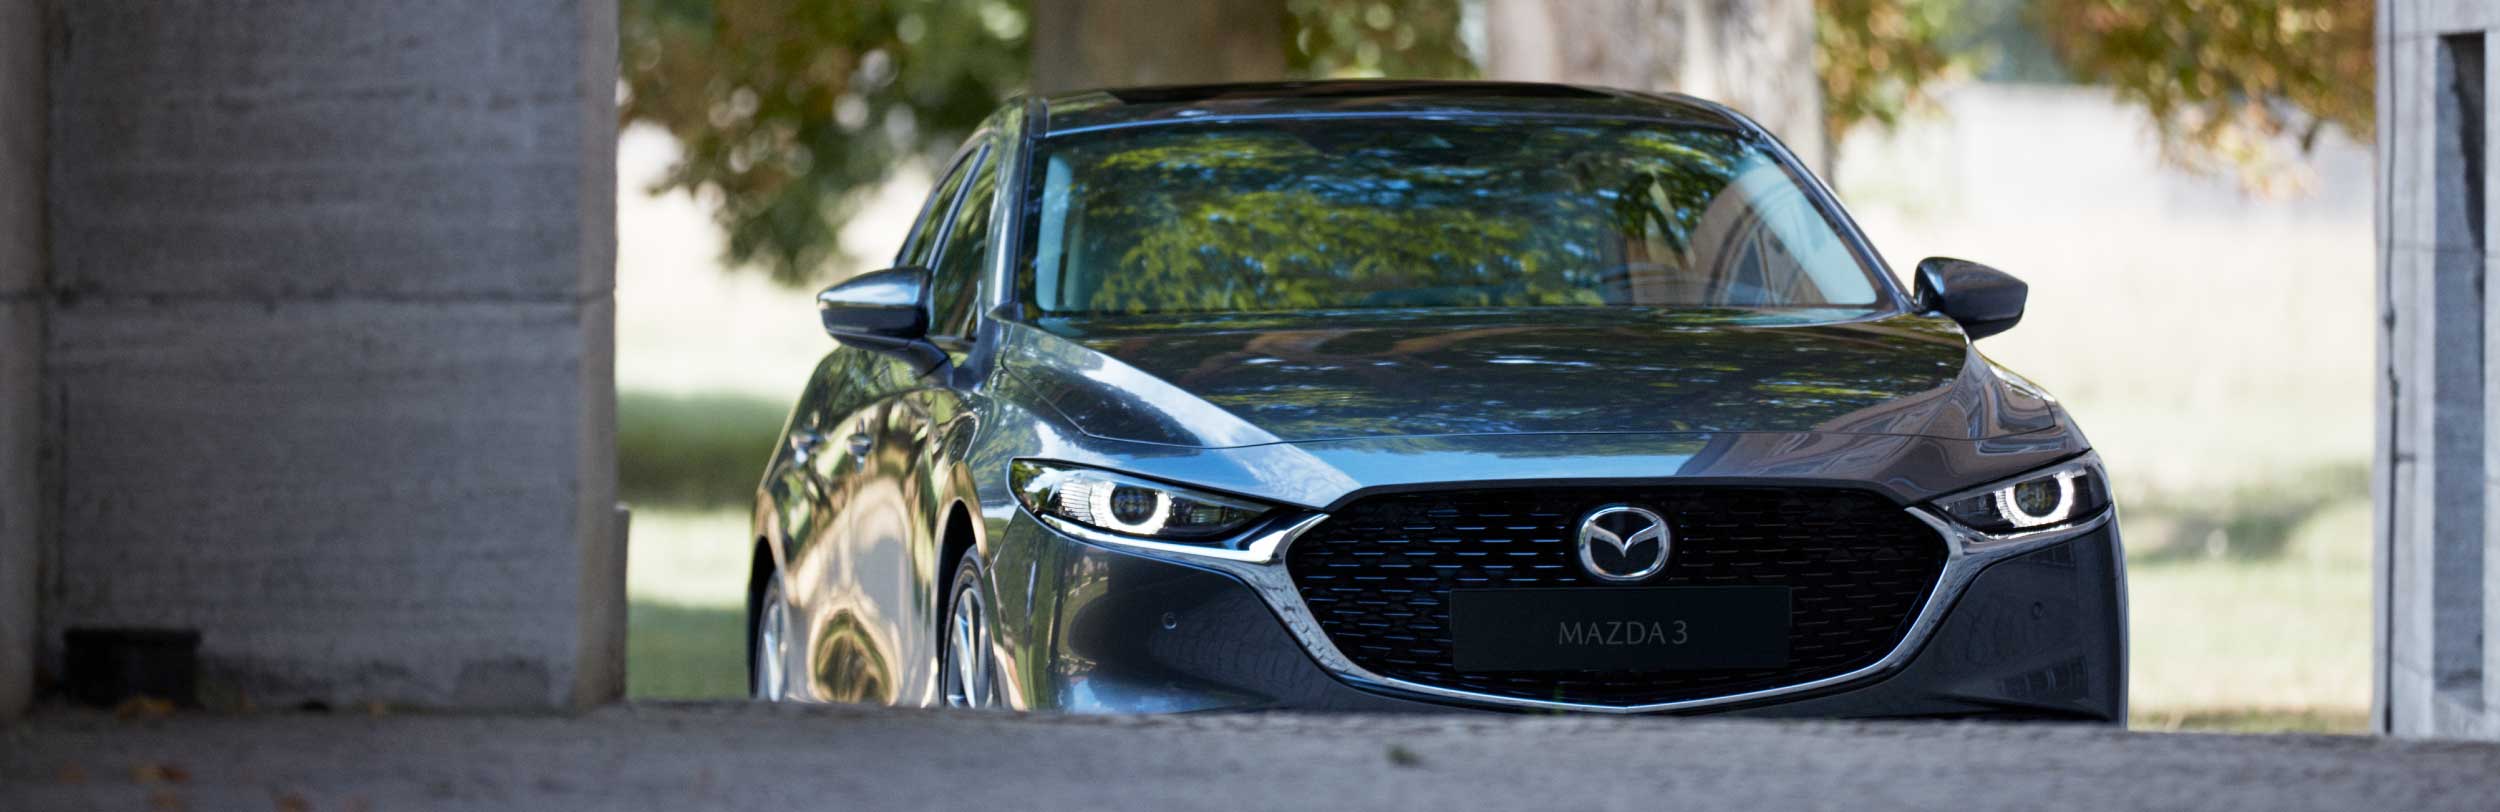 Mazda 3 hibrida banner